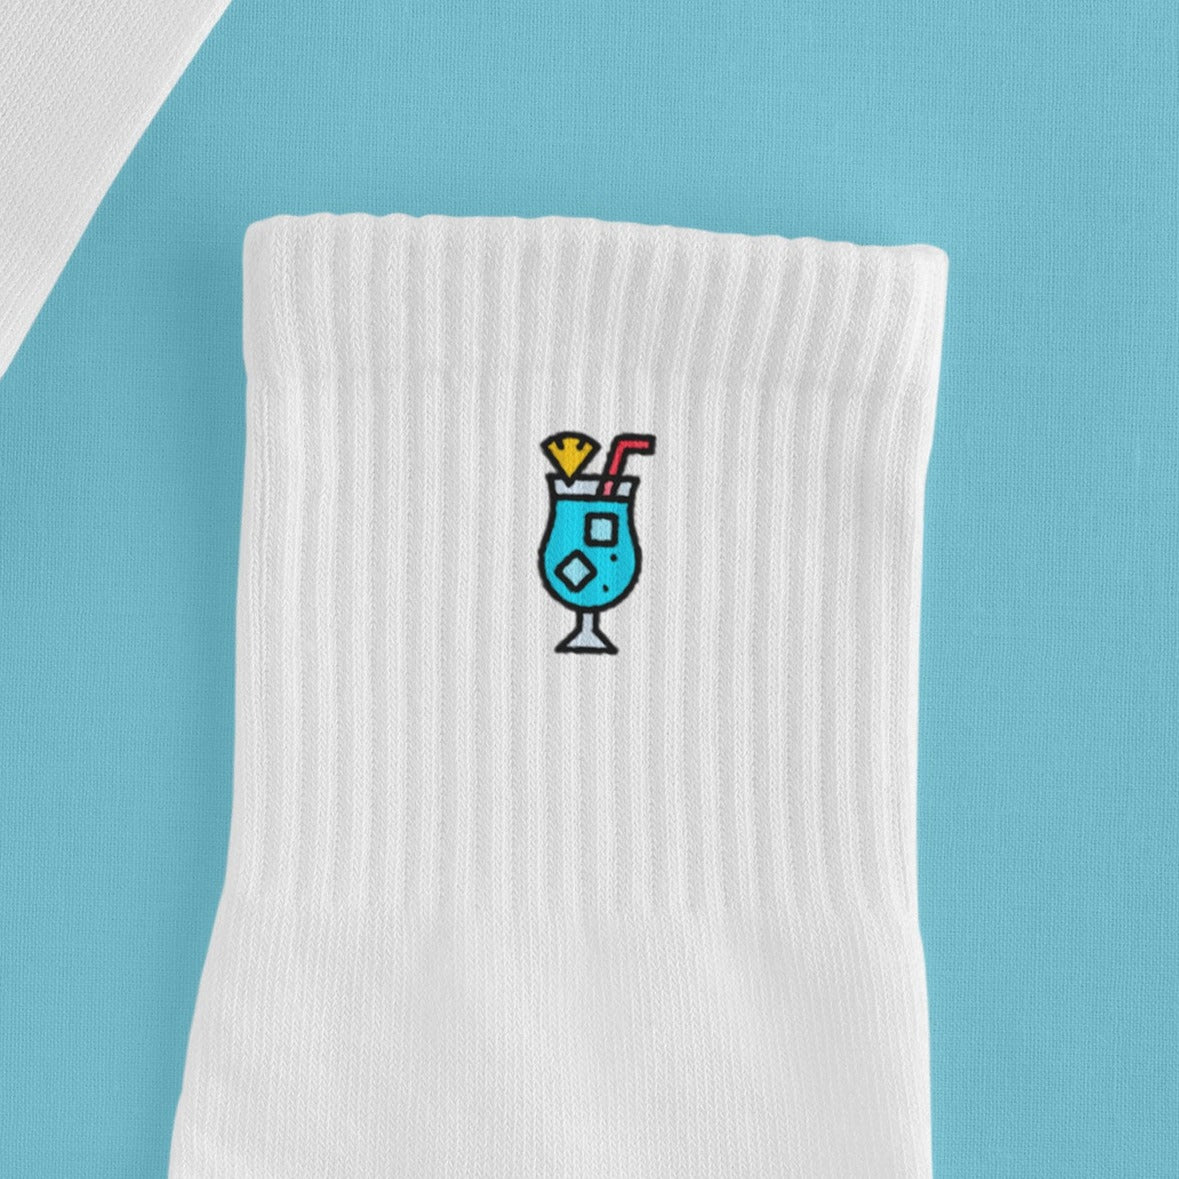 BLUE LAGOON LOGO - Socken